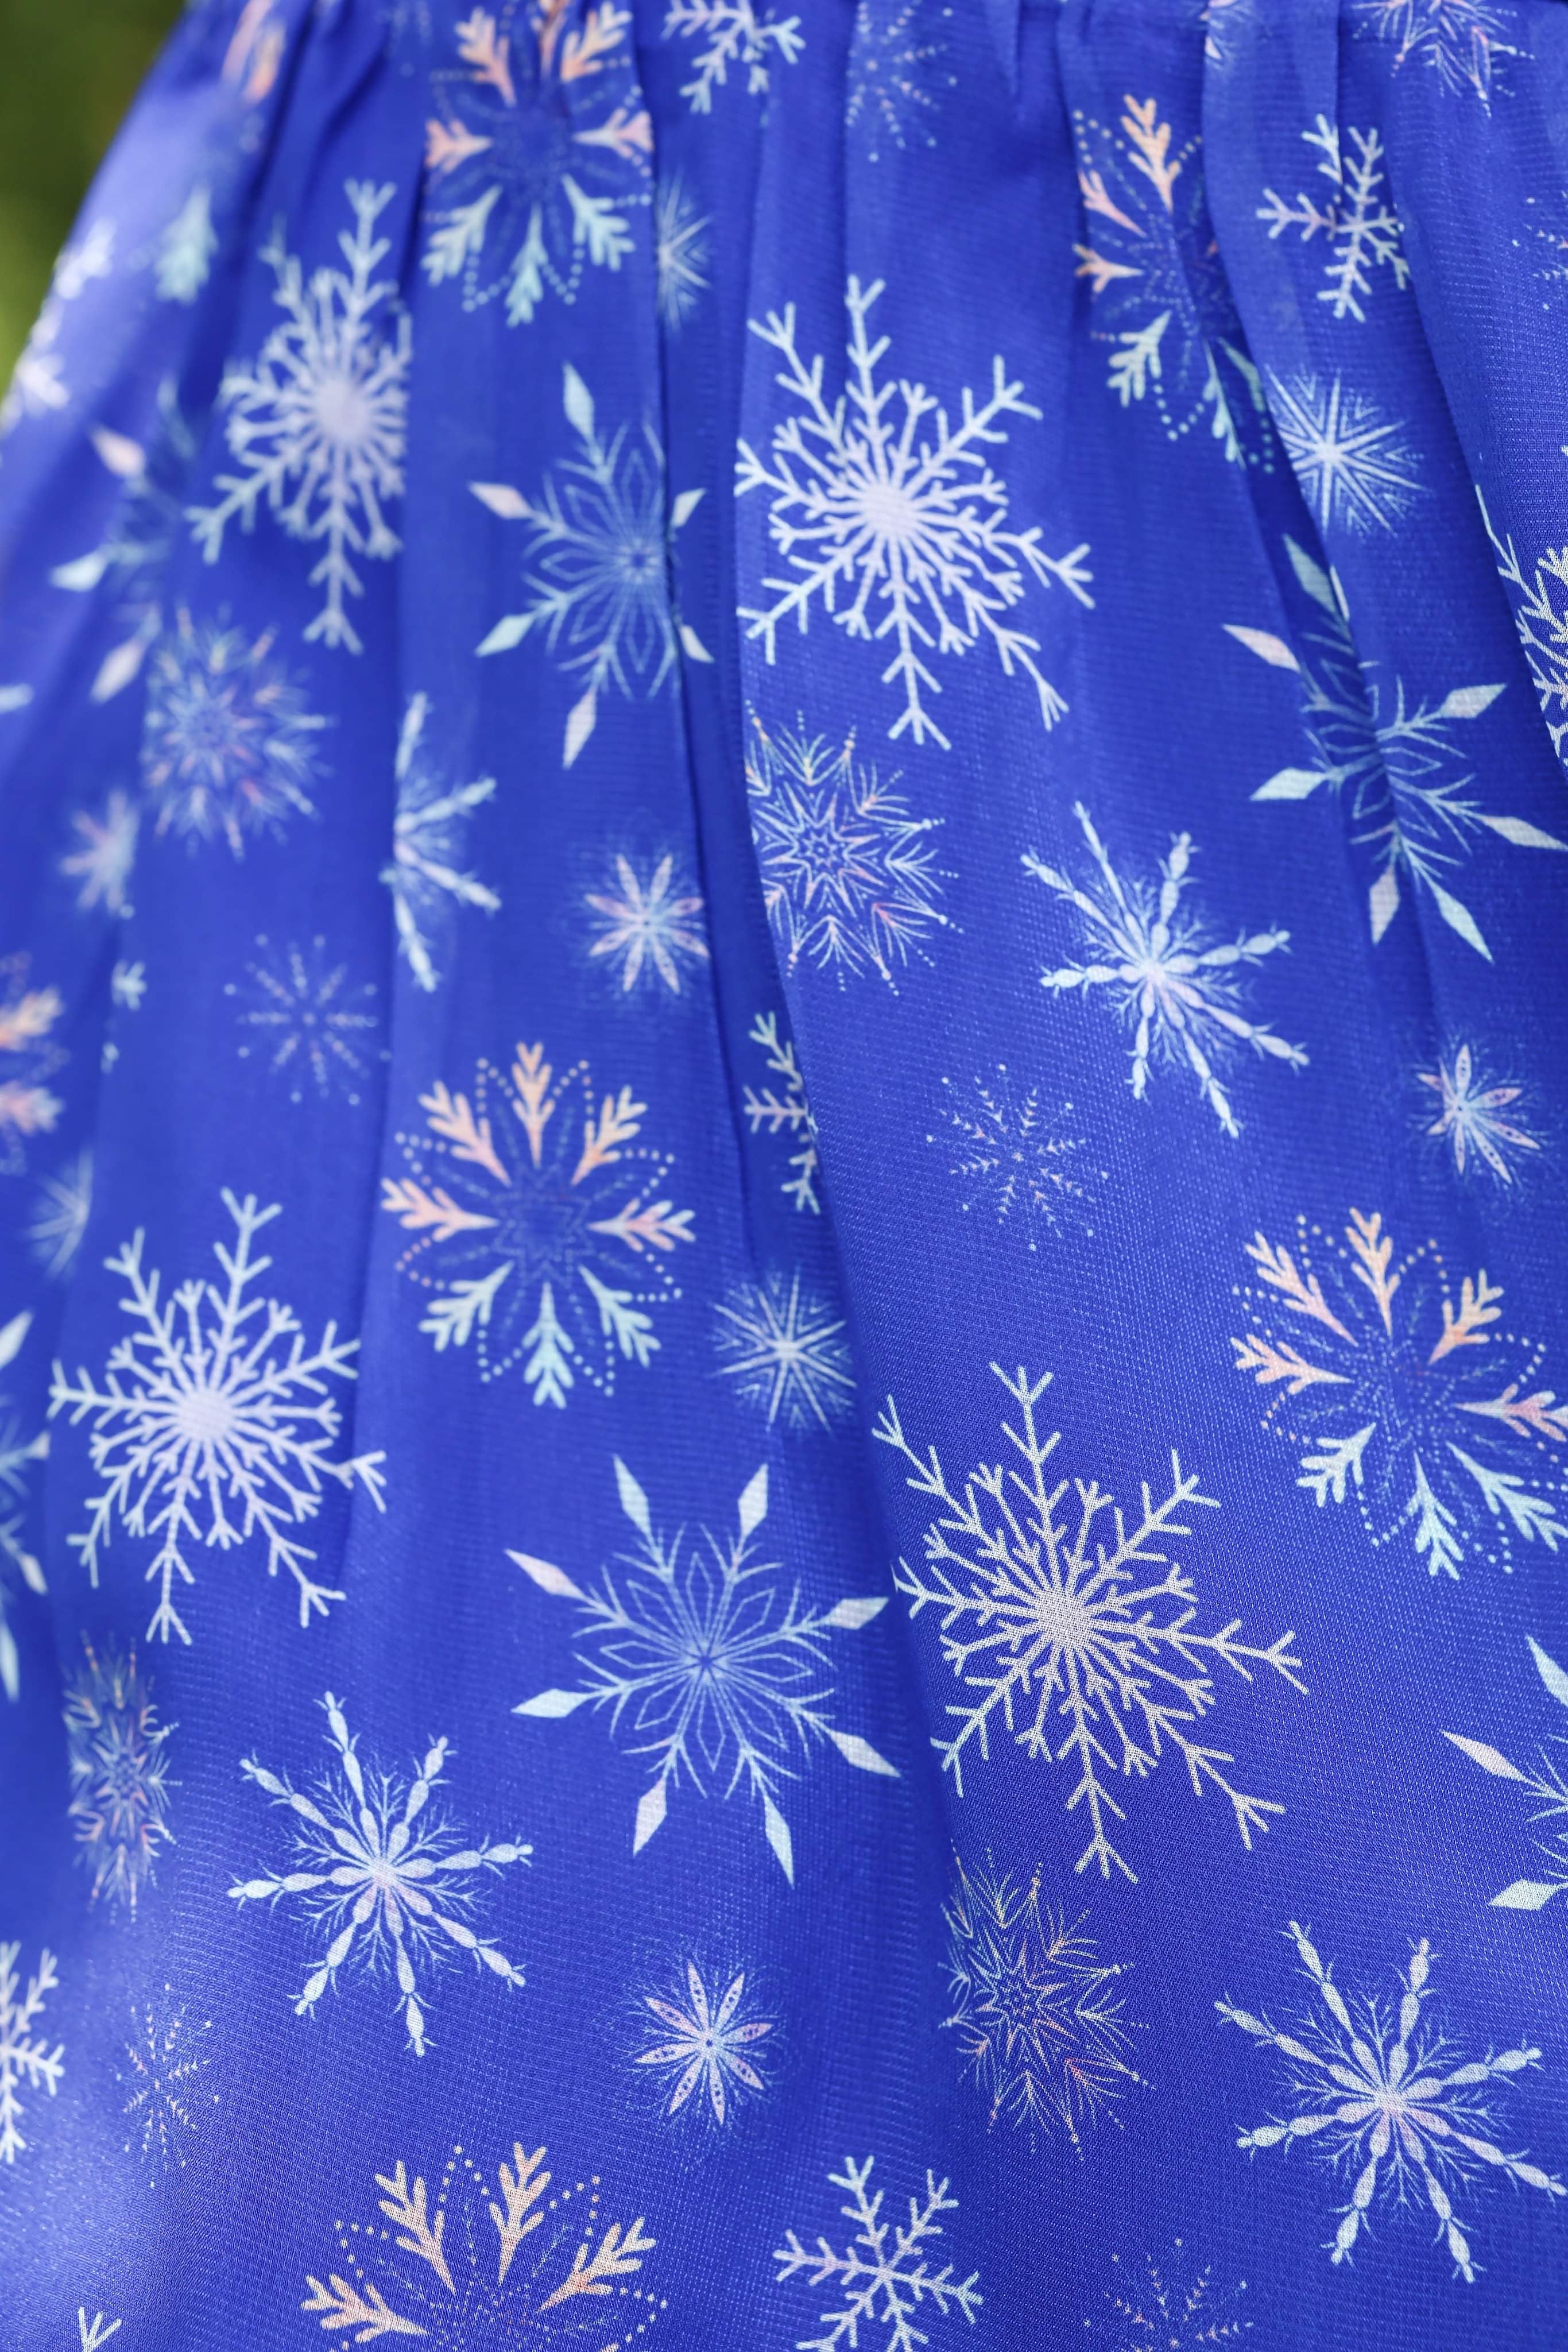 Winter Snowflake Dress - Evie's Closet Clothing